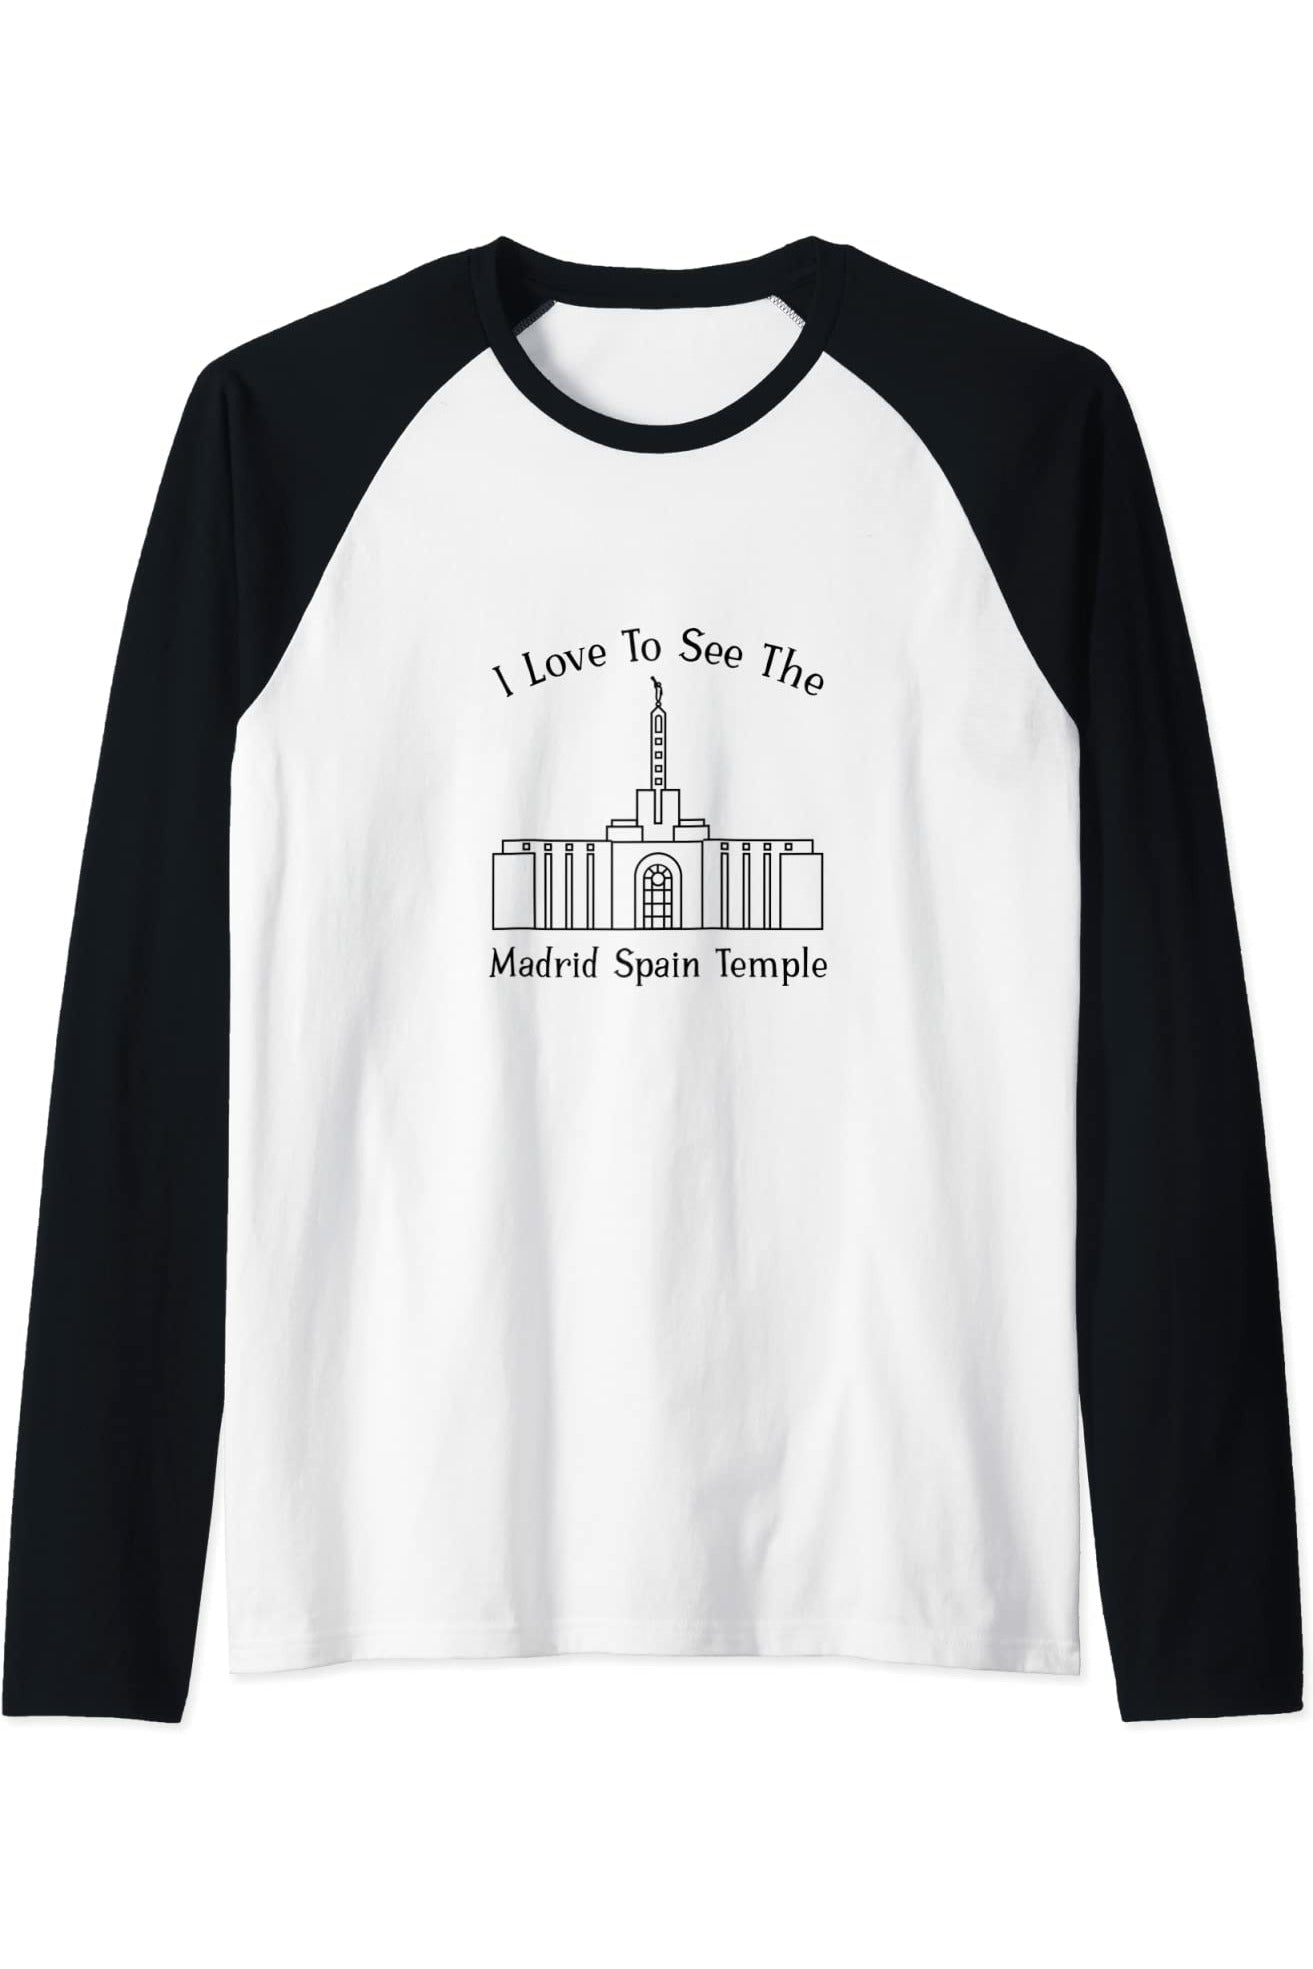 Madrid Spagna Tempio, amo vedere il mio tempio, felice Raglan T-Shirt